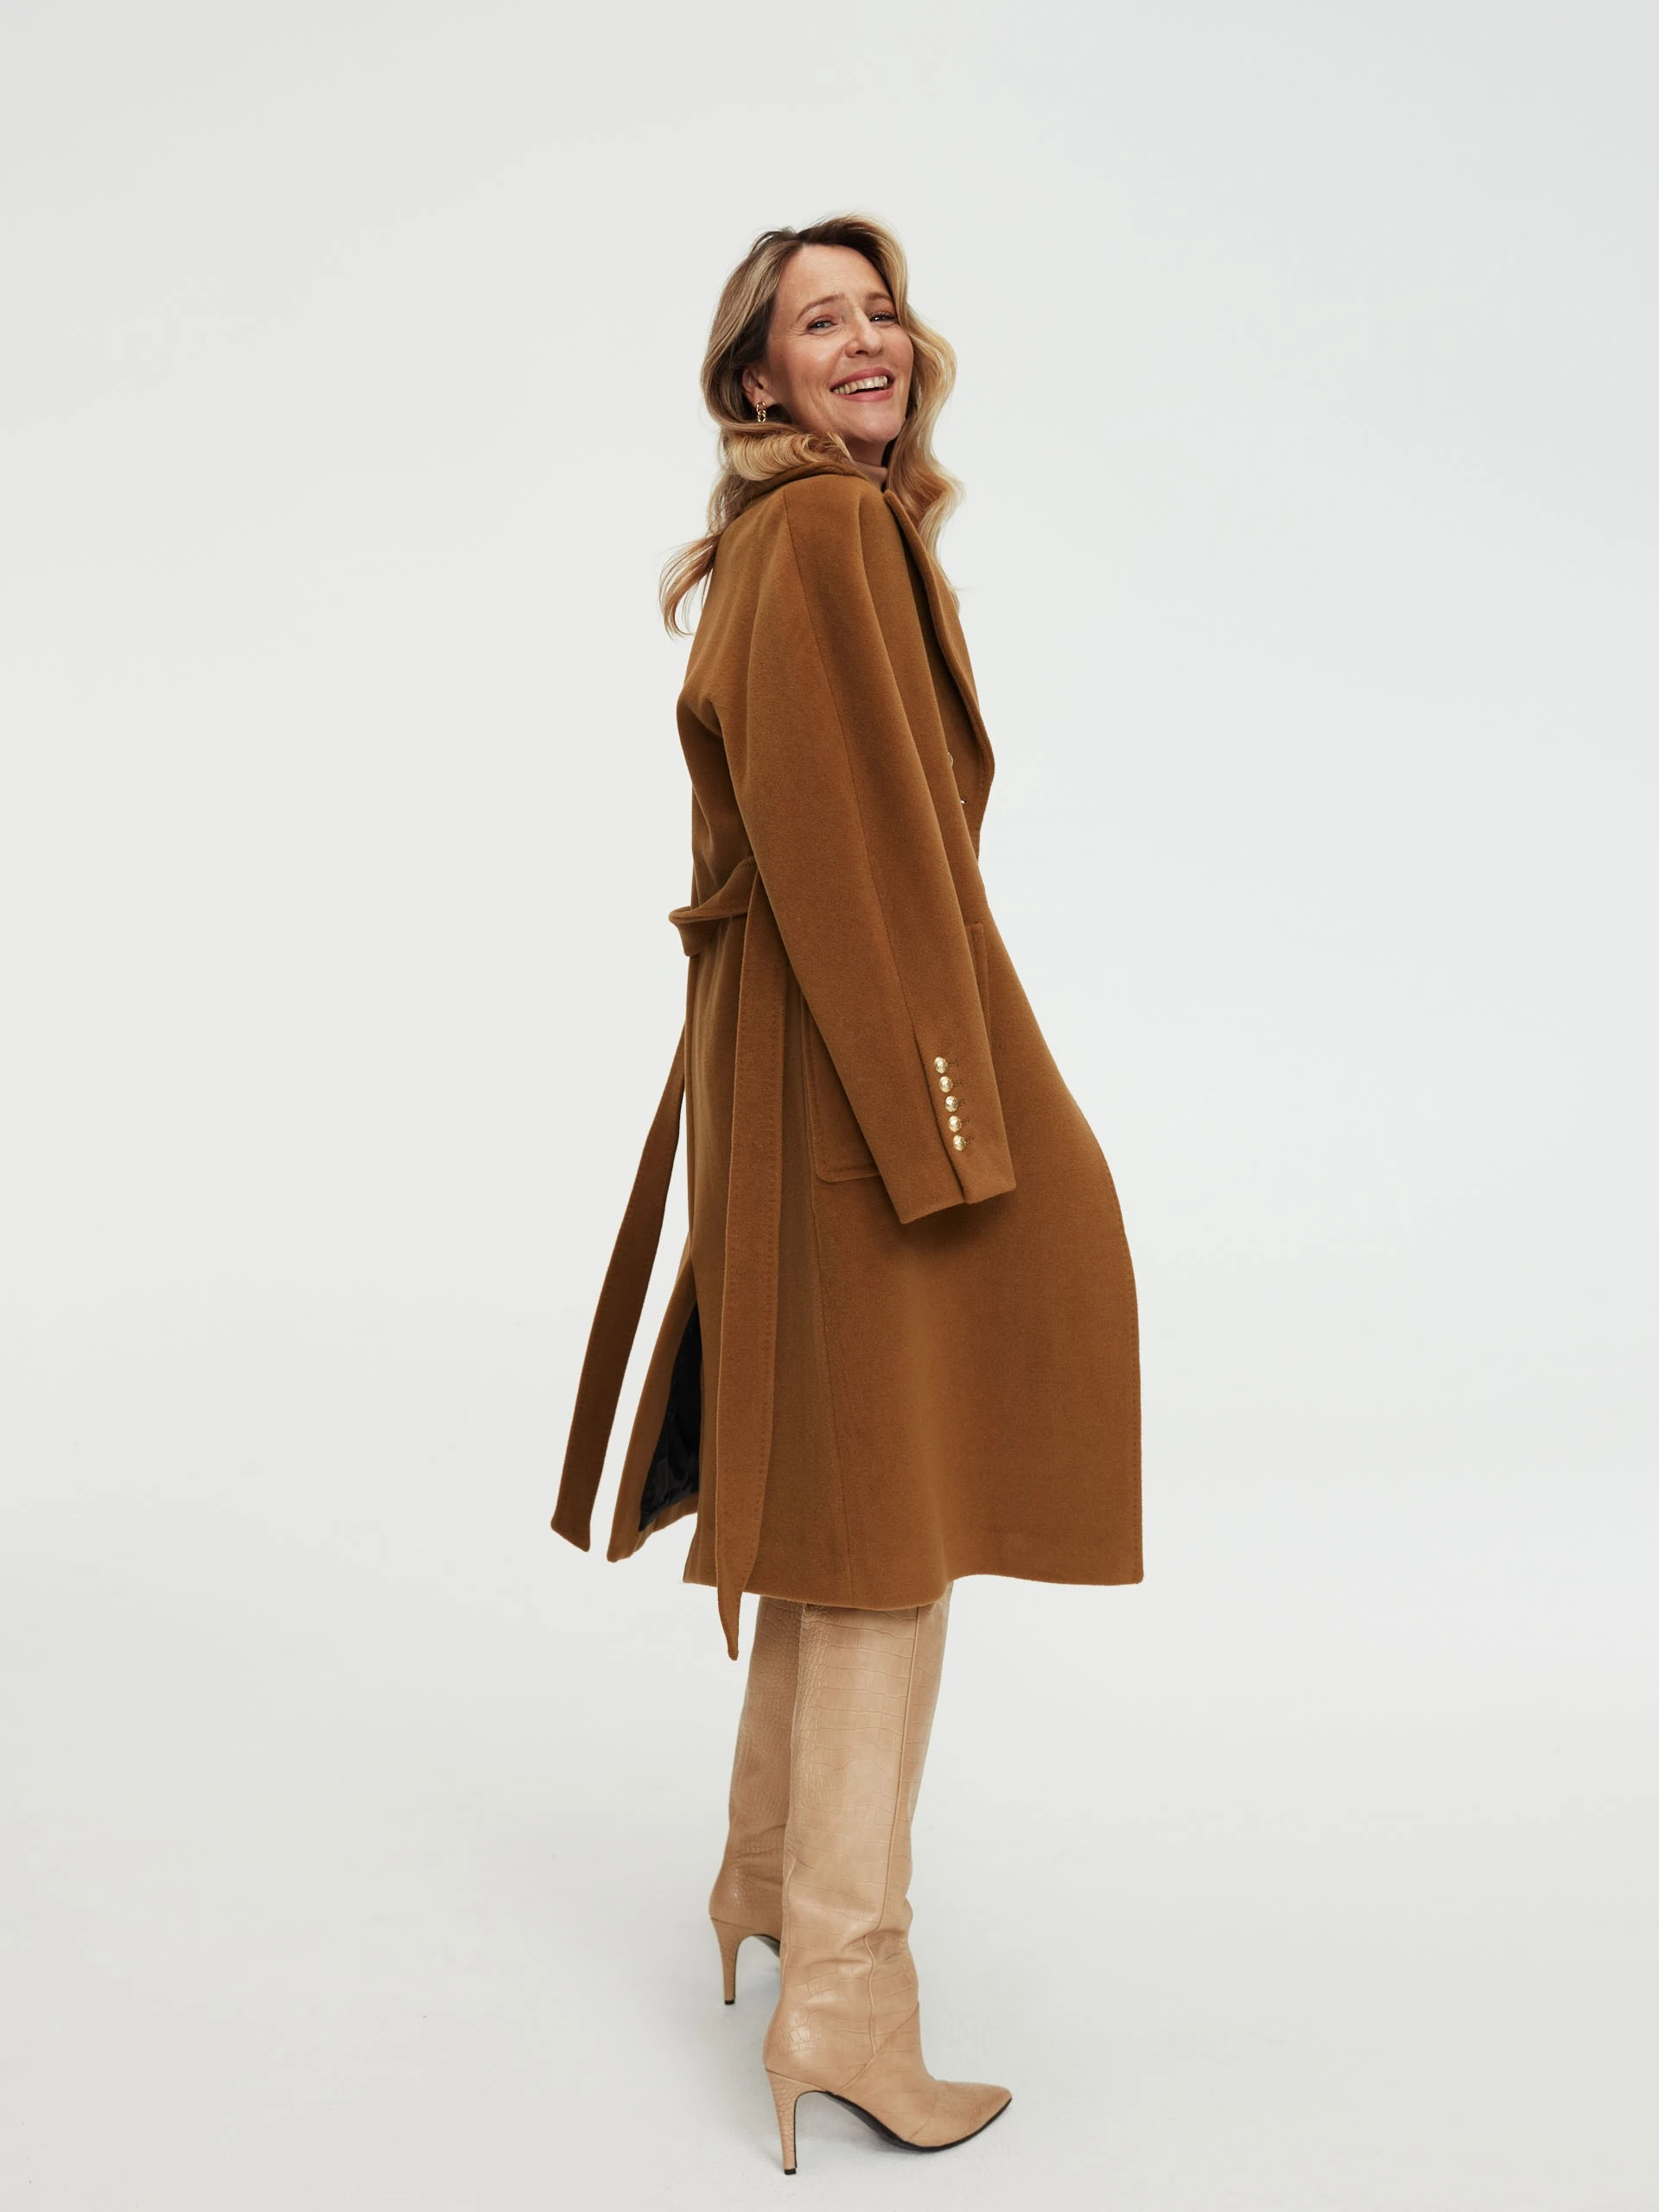 Carmel-colored wool coat